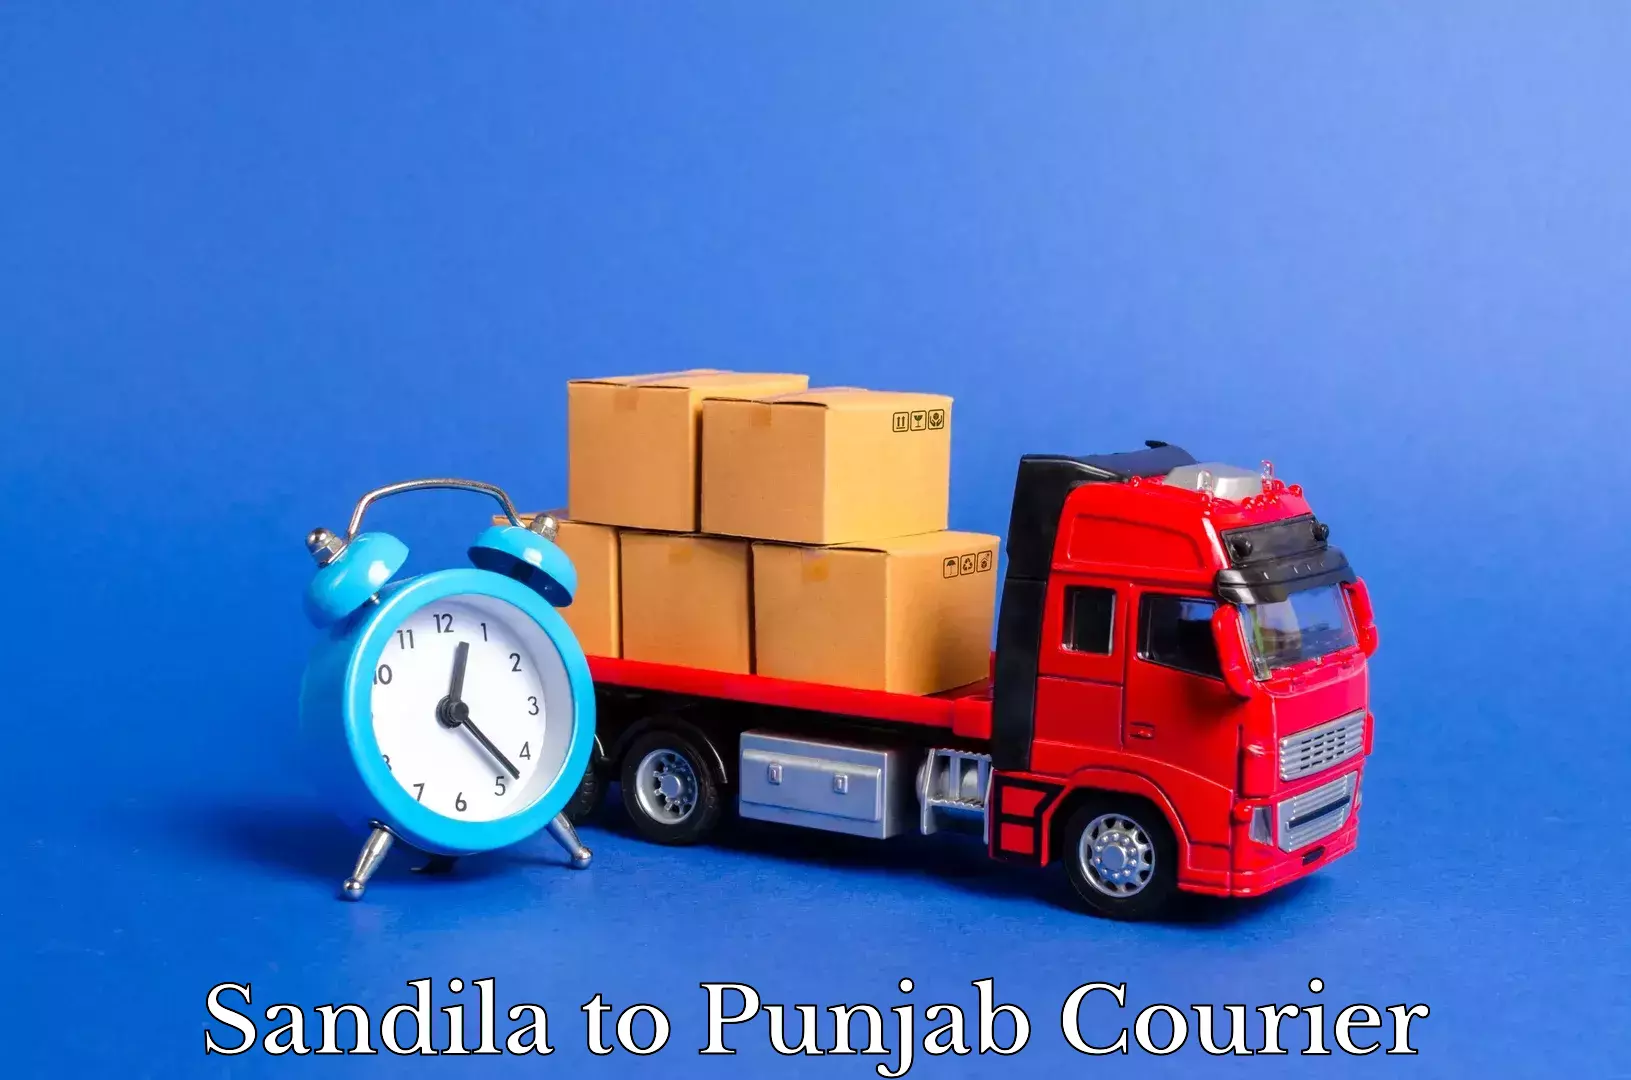 Professional moving company Sandila to Punjab